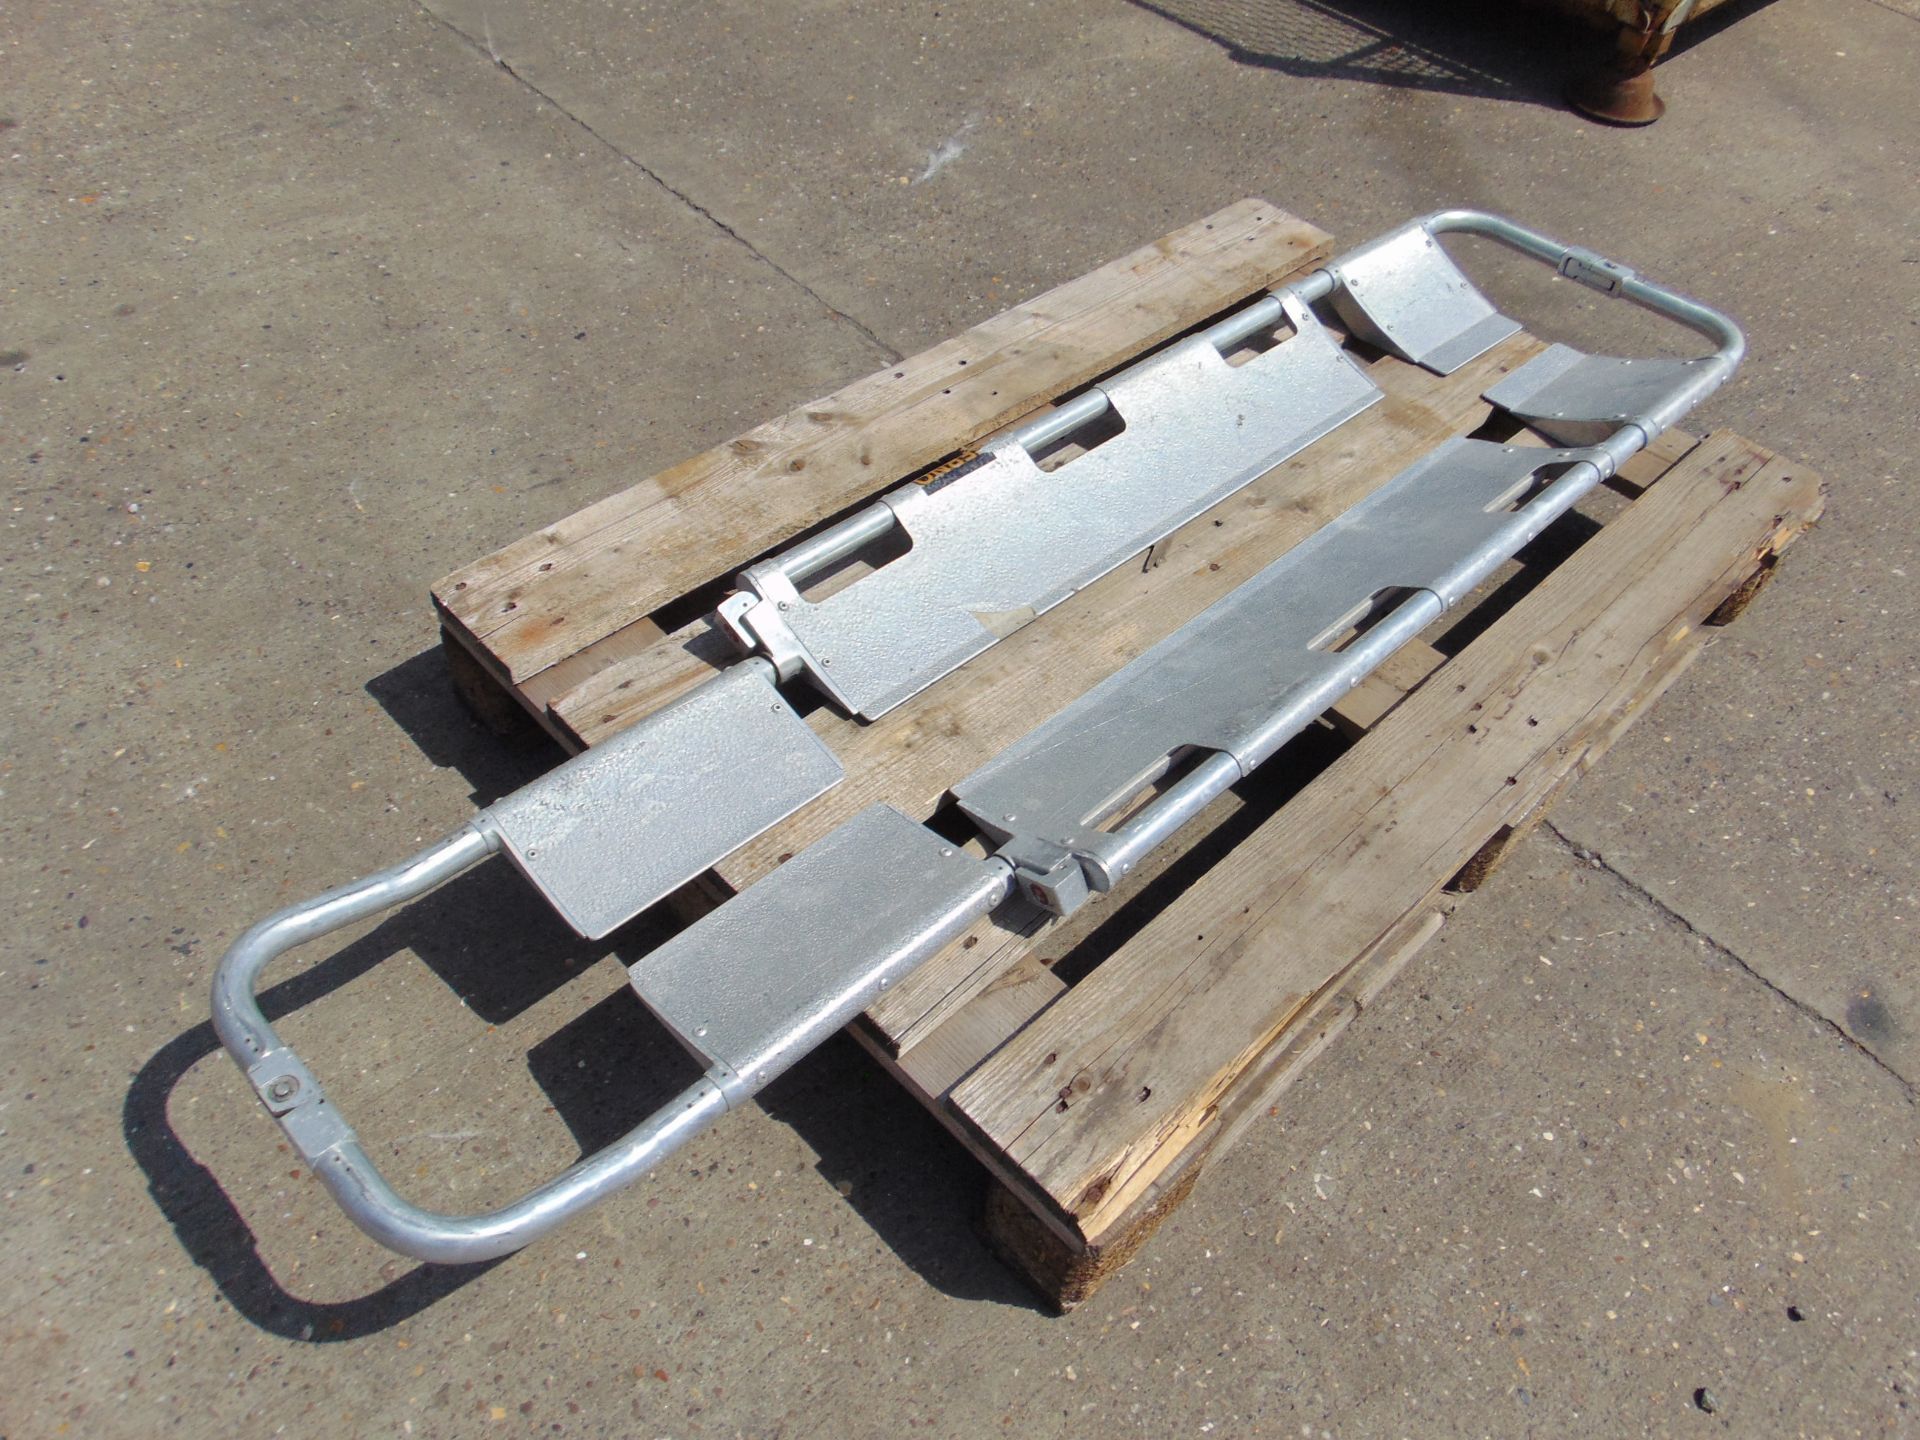 Ferno Aluminium Spine Board Stretcher